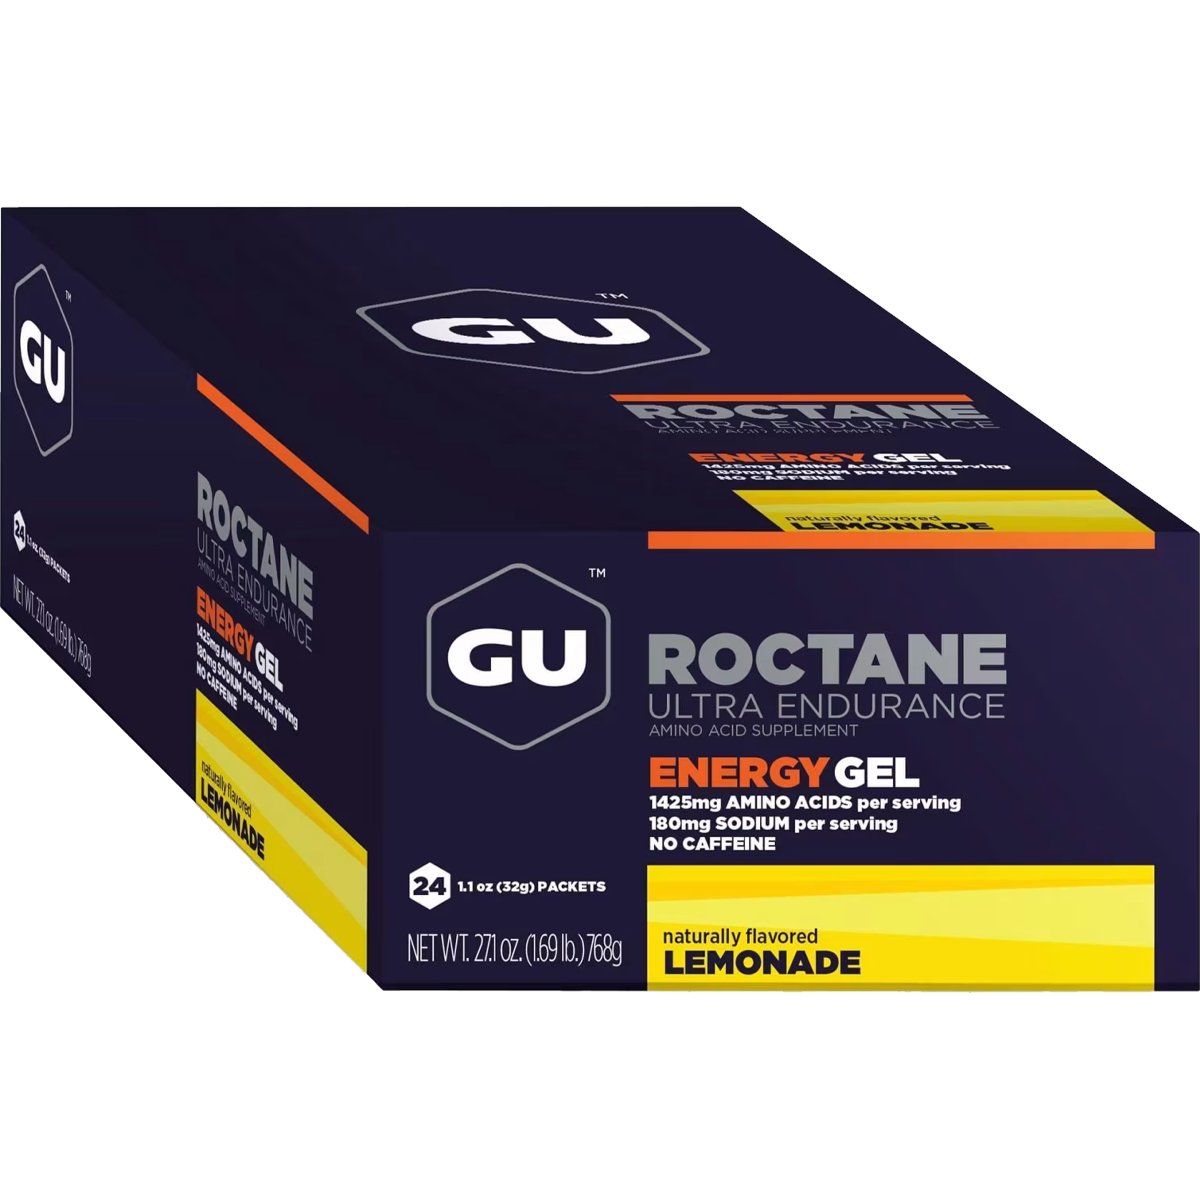 GU Roctane Energy Gel alternate view